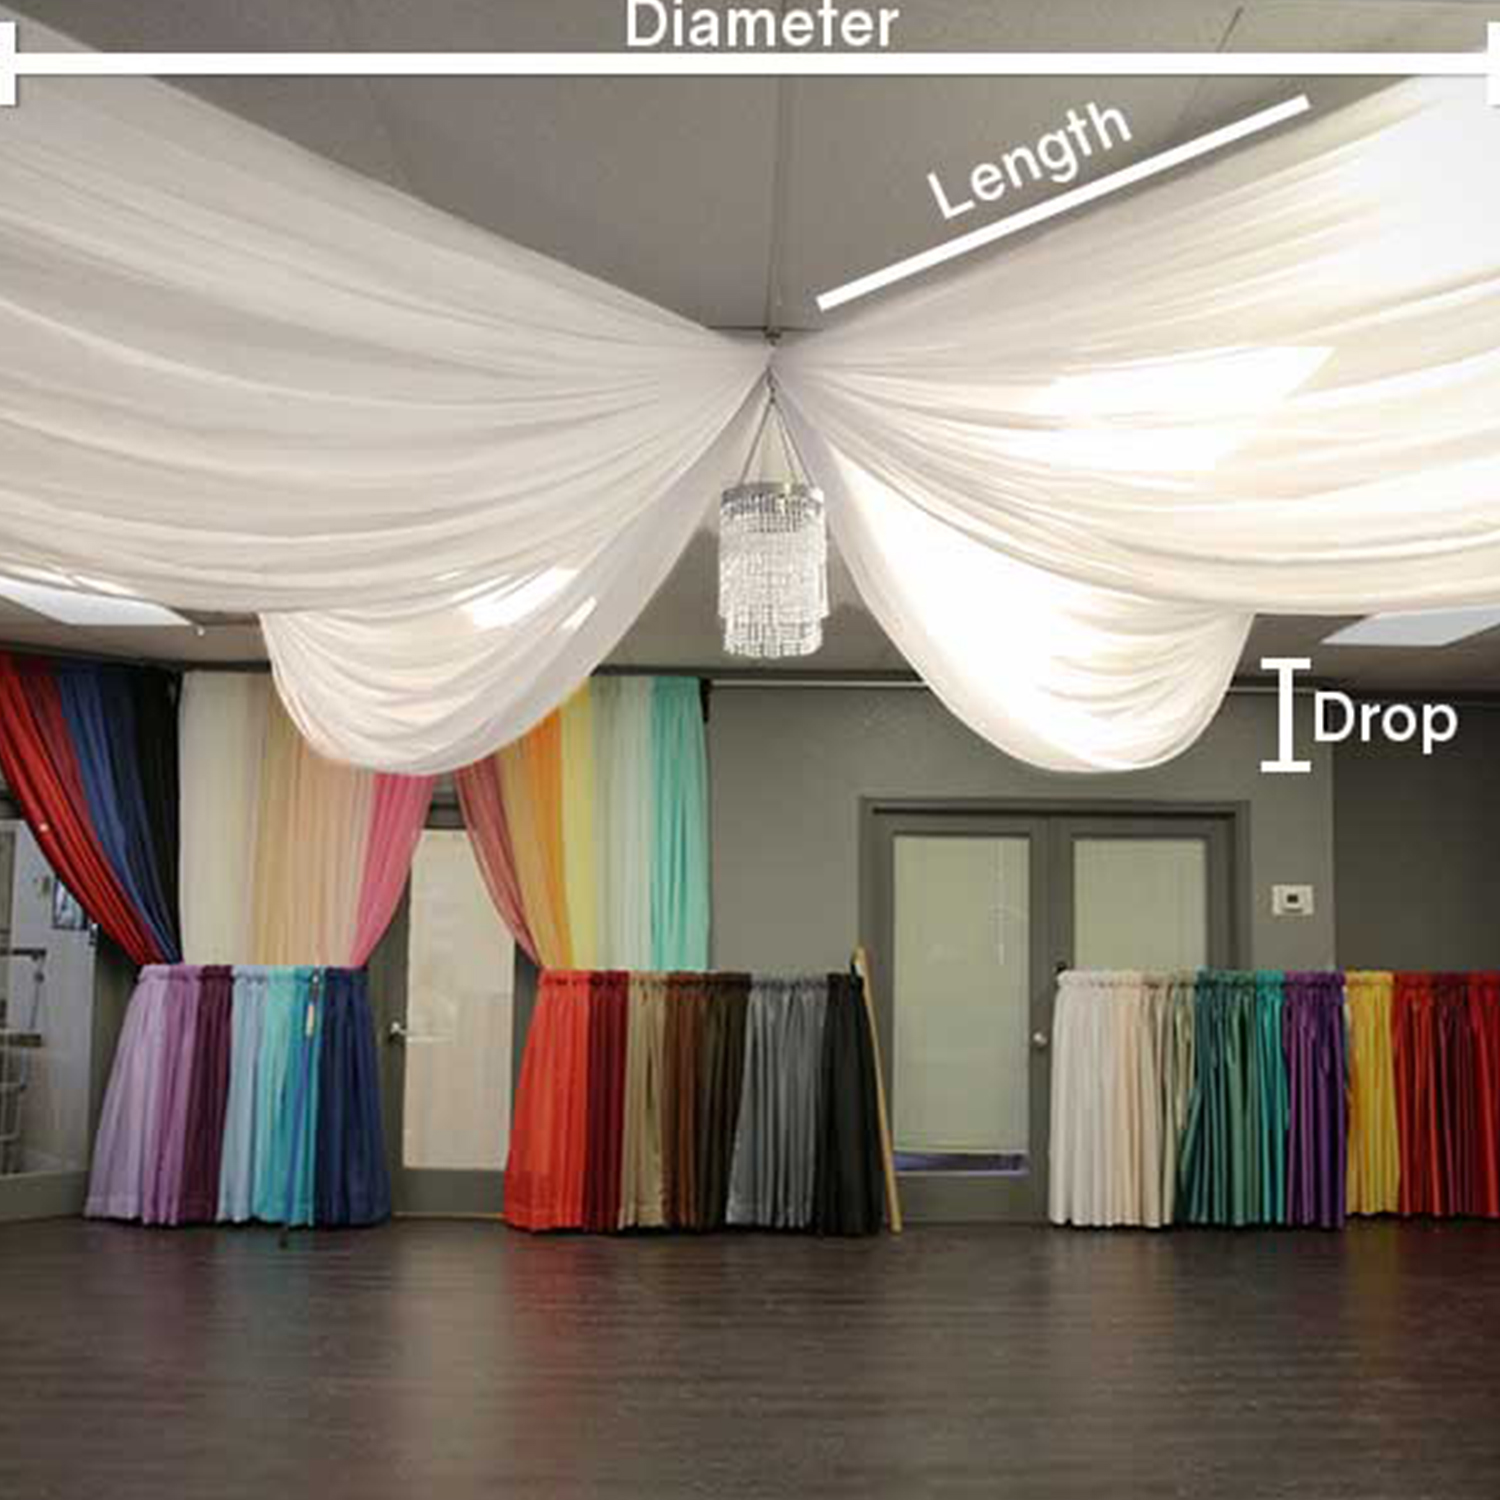 Cheap 3 Panels Reusable Wedding Arch Draping Fabric 2FT x 18FT (70